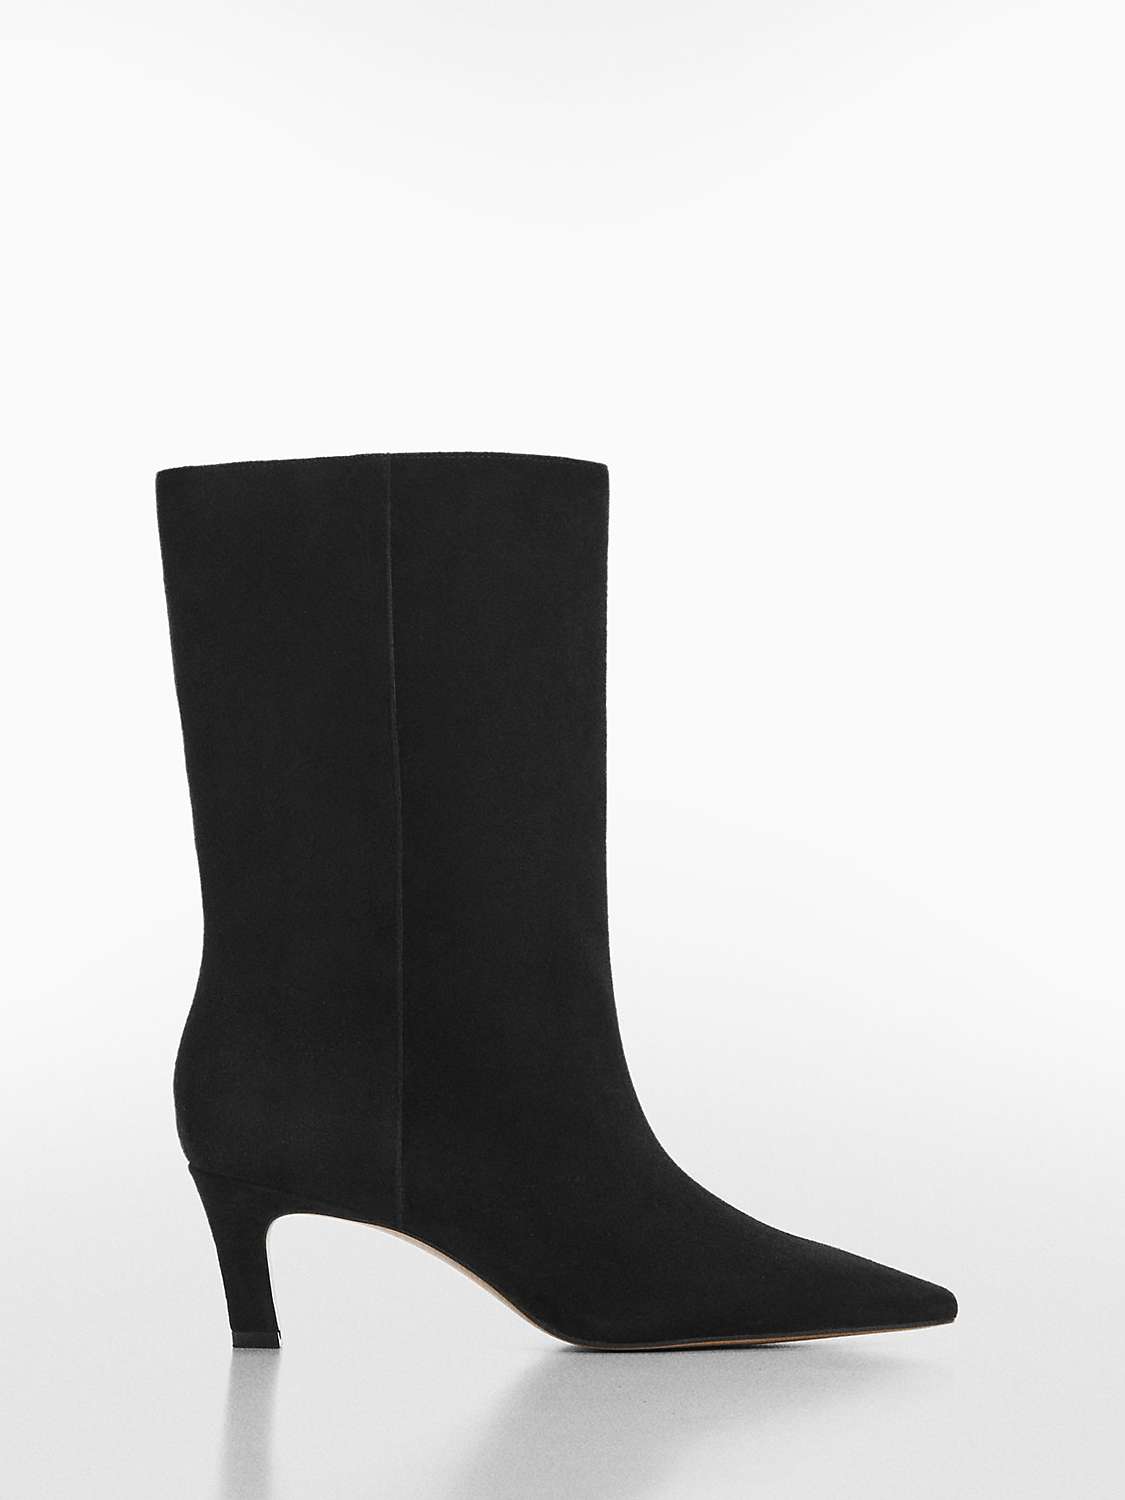 Buy Mango Hiro Pointed Kitten Heel Boots, Black Online at johnlewis.com